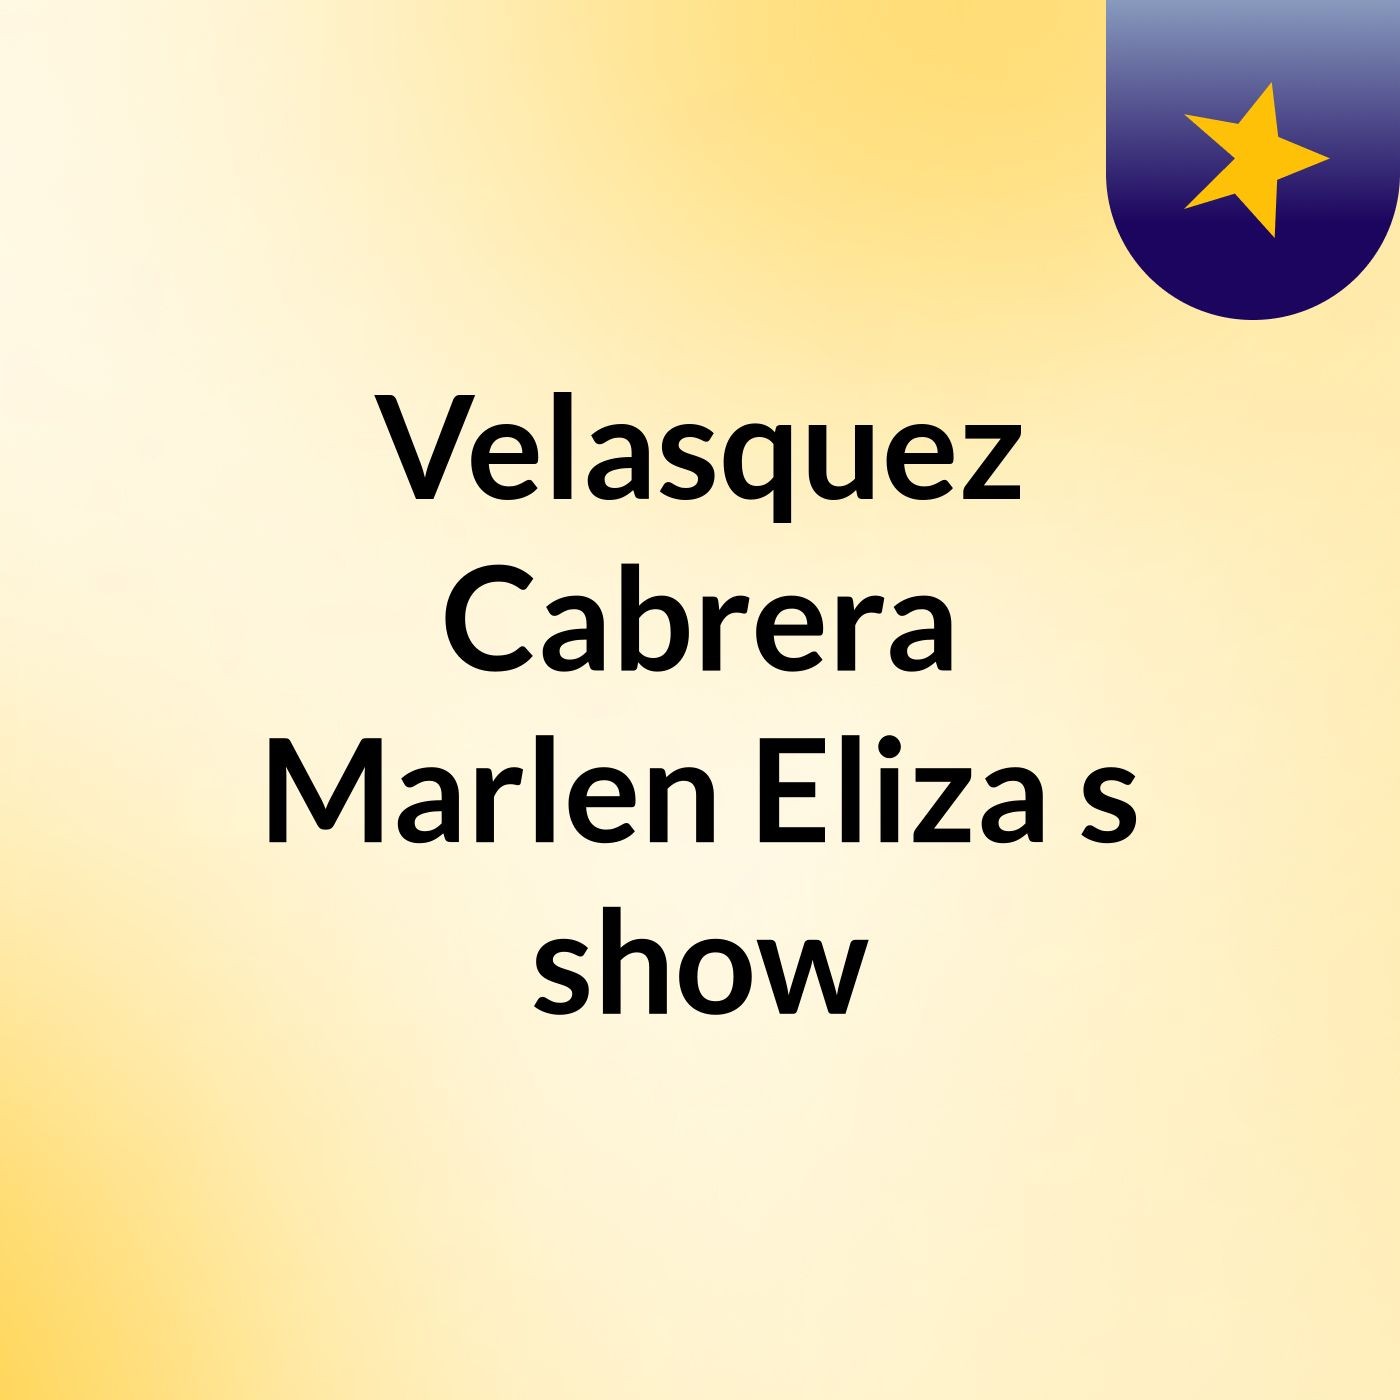 Velasquez Cabrera Marlen Eliza's show